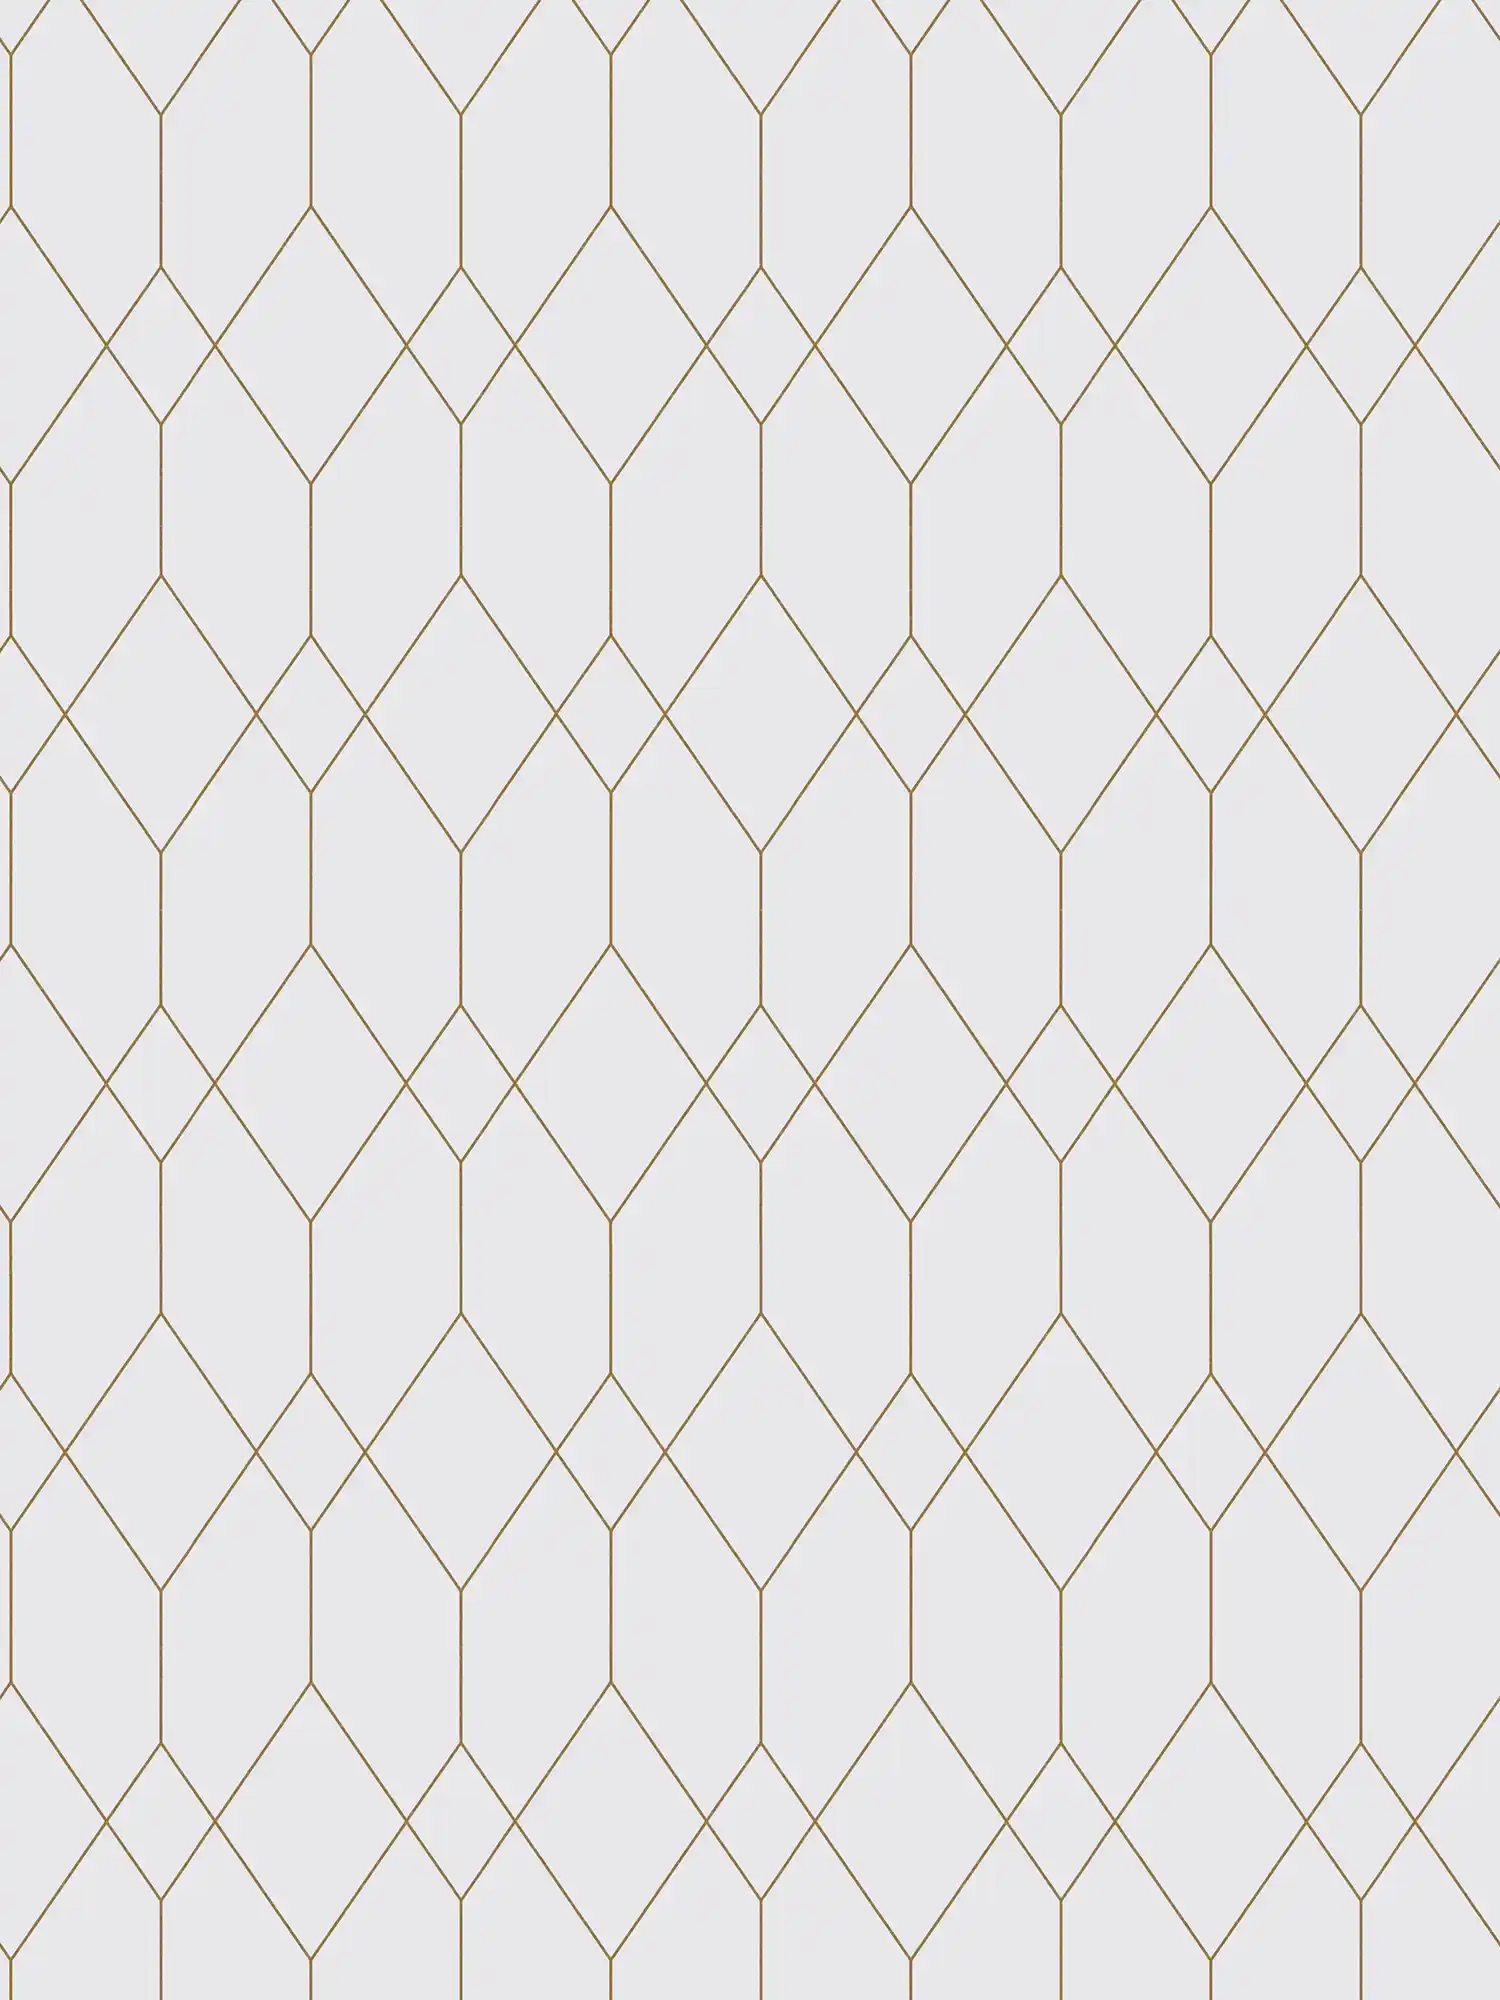 Self-adhesive wallpaper | Geometric line pattern in gold - white, metallic
